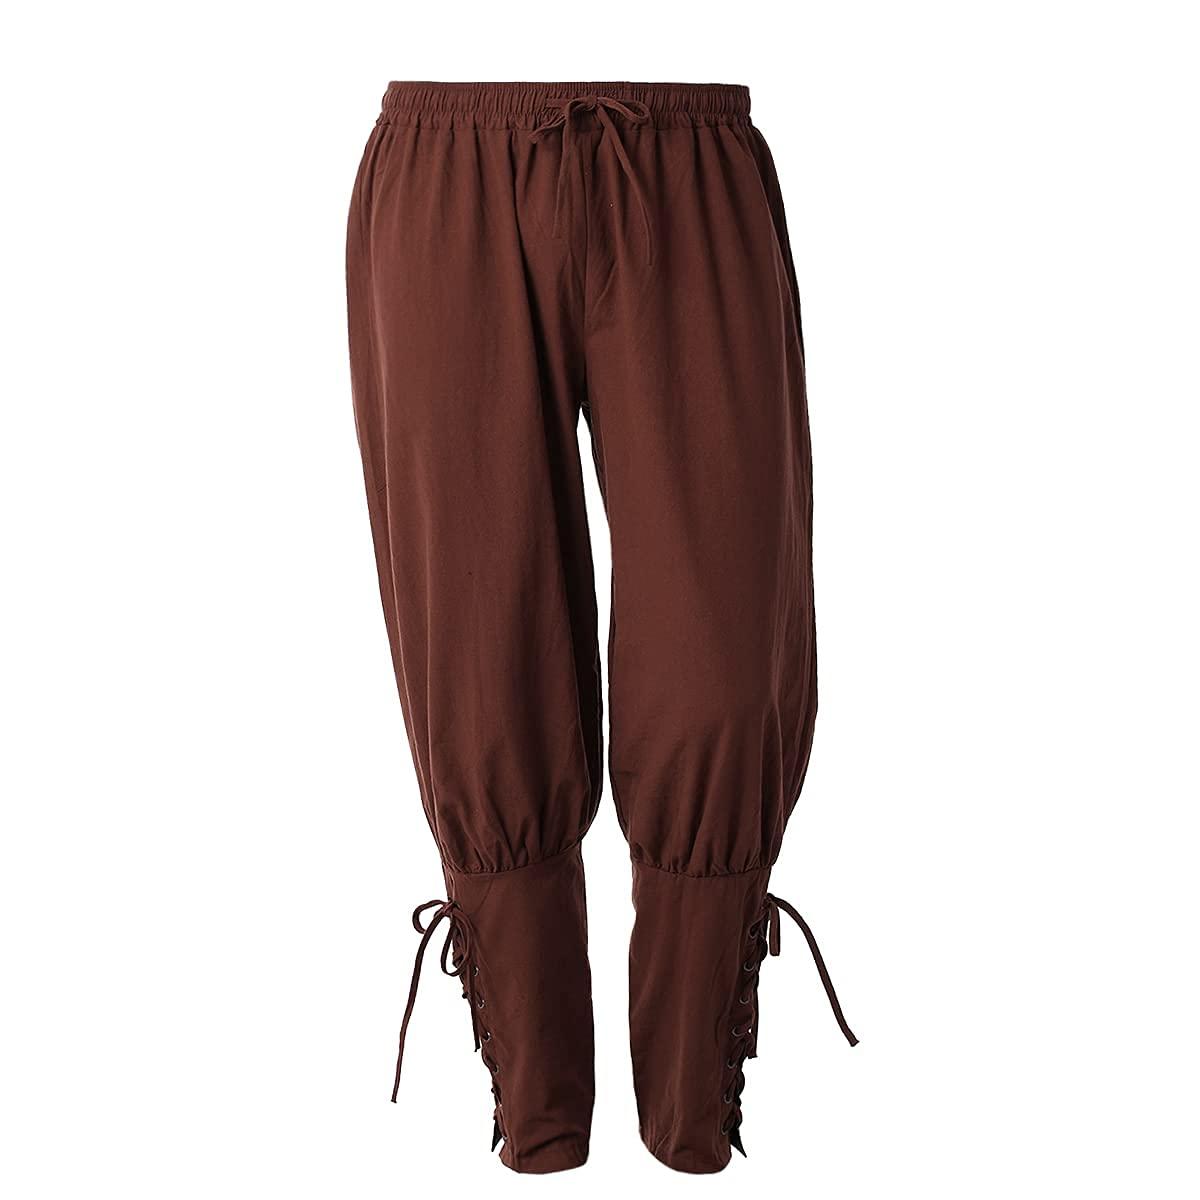 COSDREAMER Men's Medieval Pants Viking Pirate Costume Trousers Brown 4